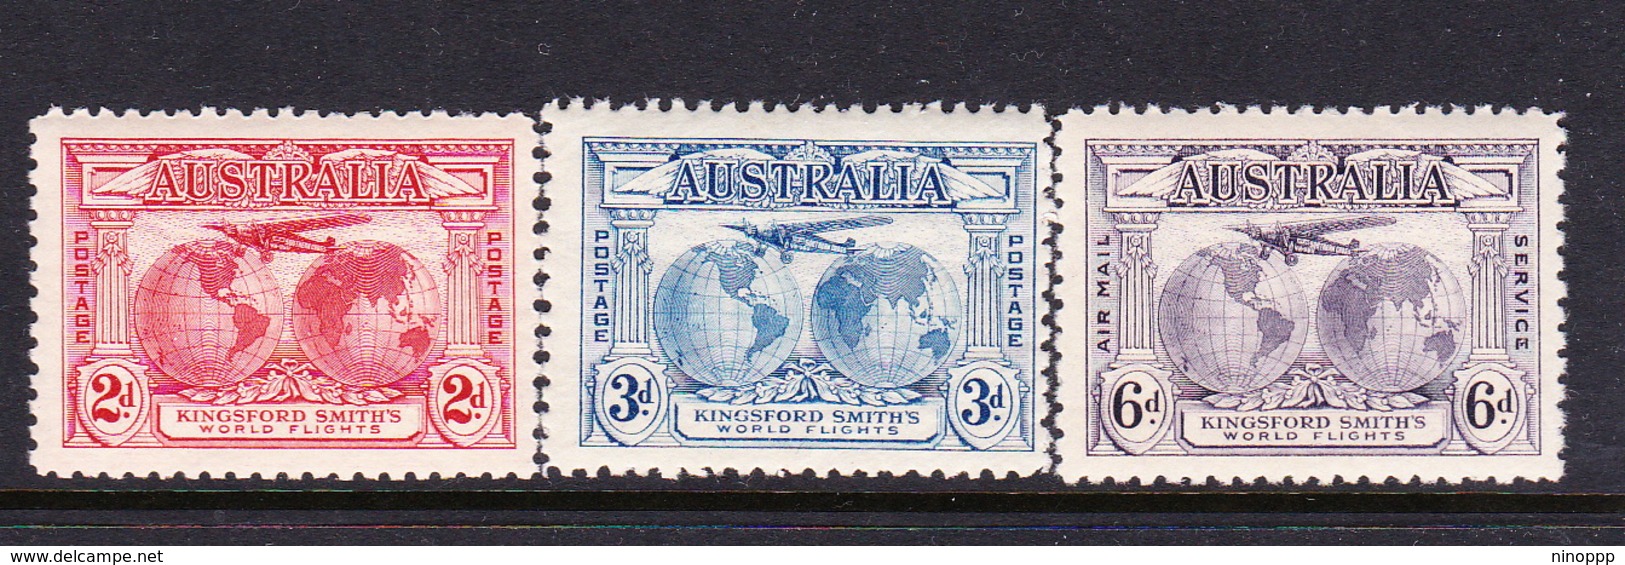 Australia SG 121-123 1931 Kingsford Smith's Flights, Mint Never Hinged - Ungebraucht